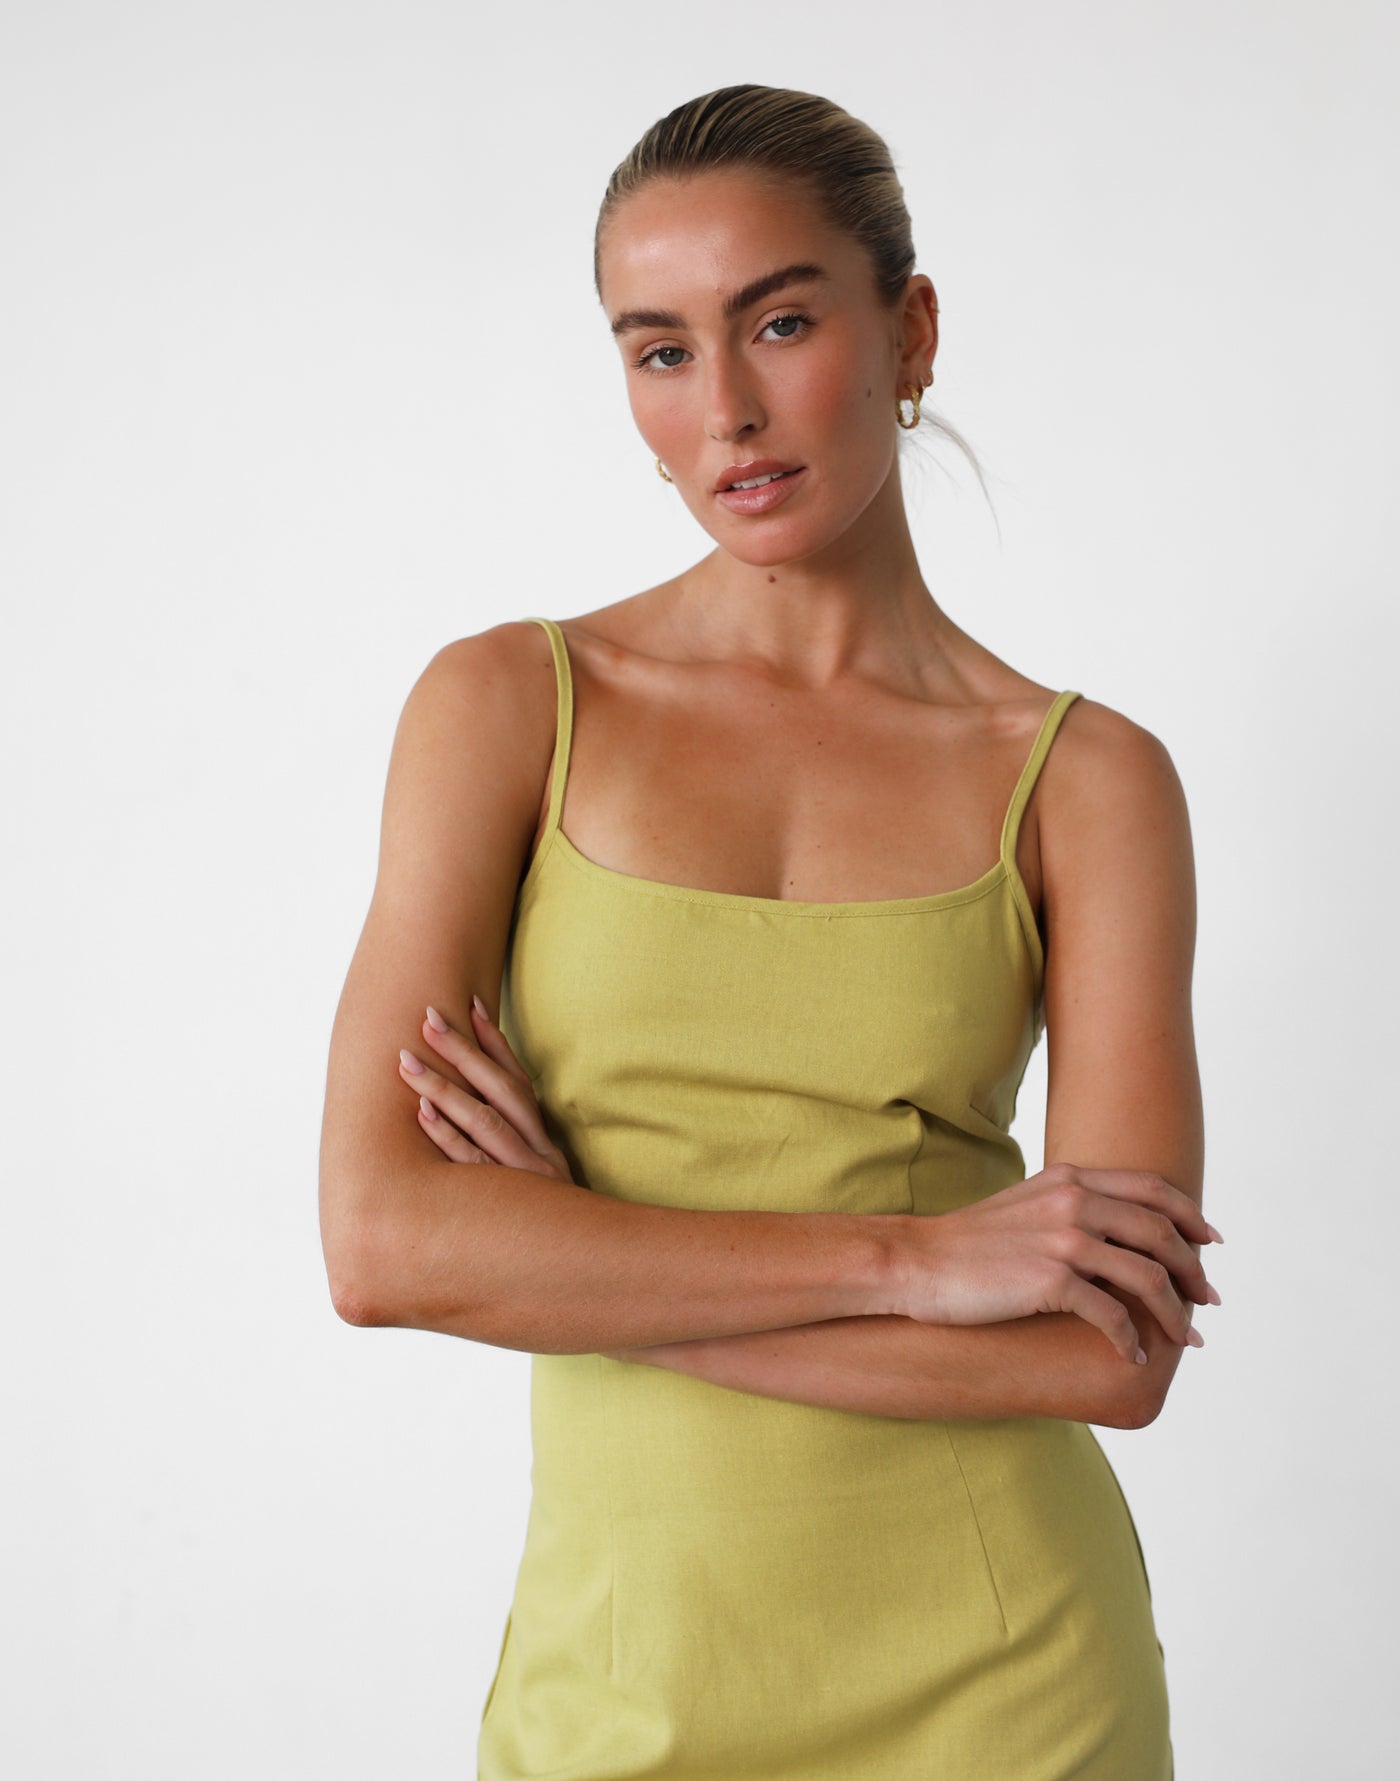 Moscow Mini Dress (Olive) - Olive Linen Maxi Dress - Women's Dress - Charcoal Clothing